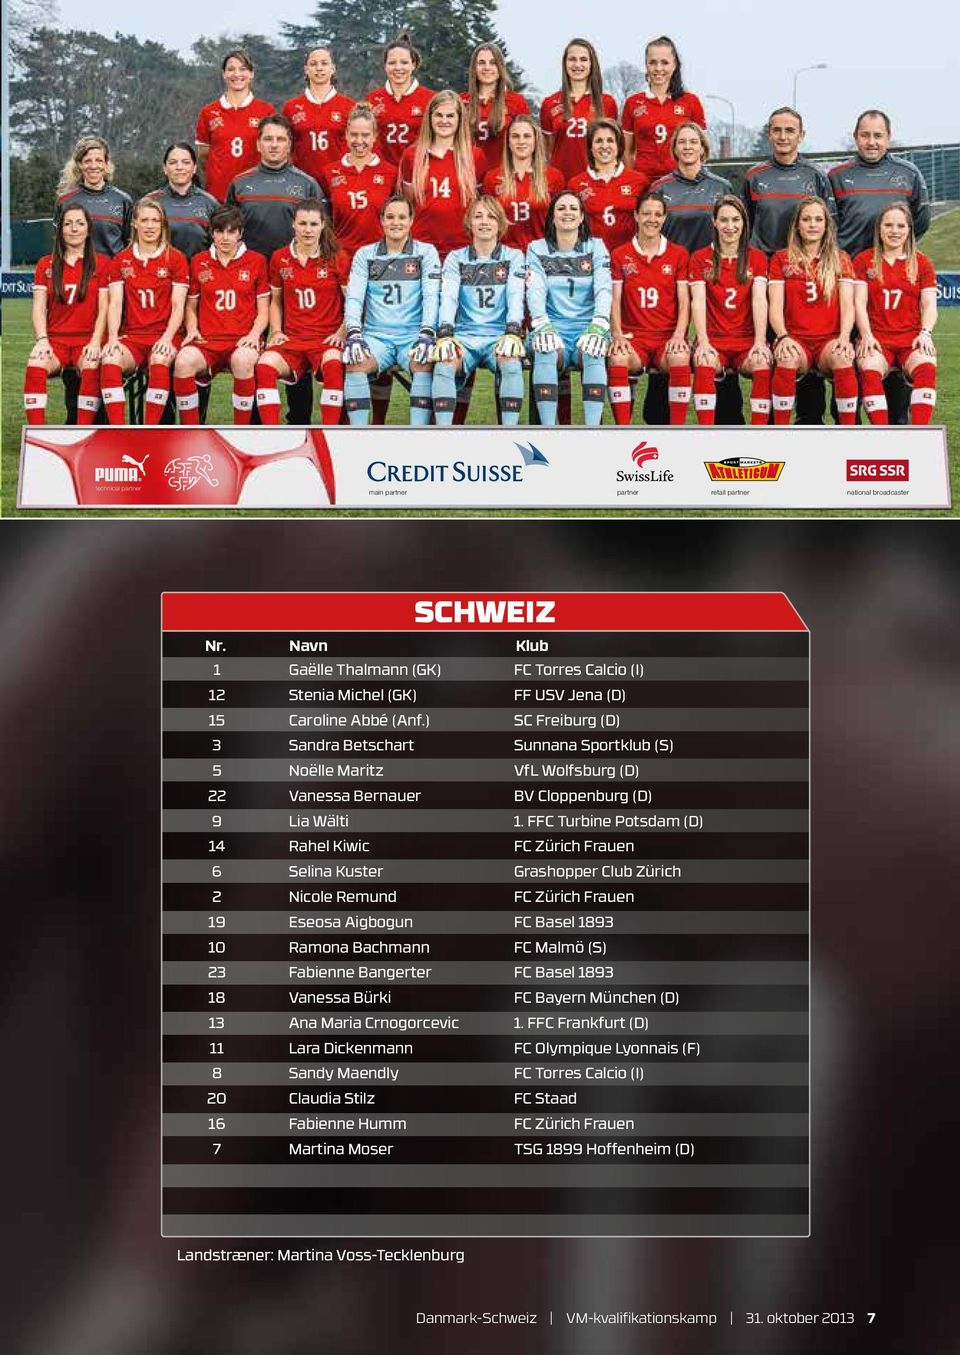 ) SC Freiburg (D) 3 Sandra Betschart Sunnana Sportklub (S) 5 Noëlle Maritz VfL Wolfsburg (D) 22 Vanessa Bernauer BV Cloppenburg (D) 9 Lia Wälti 1.